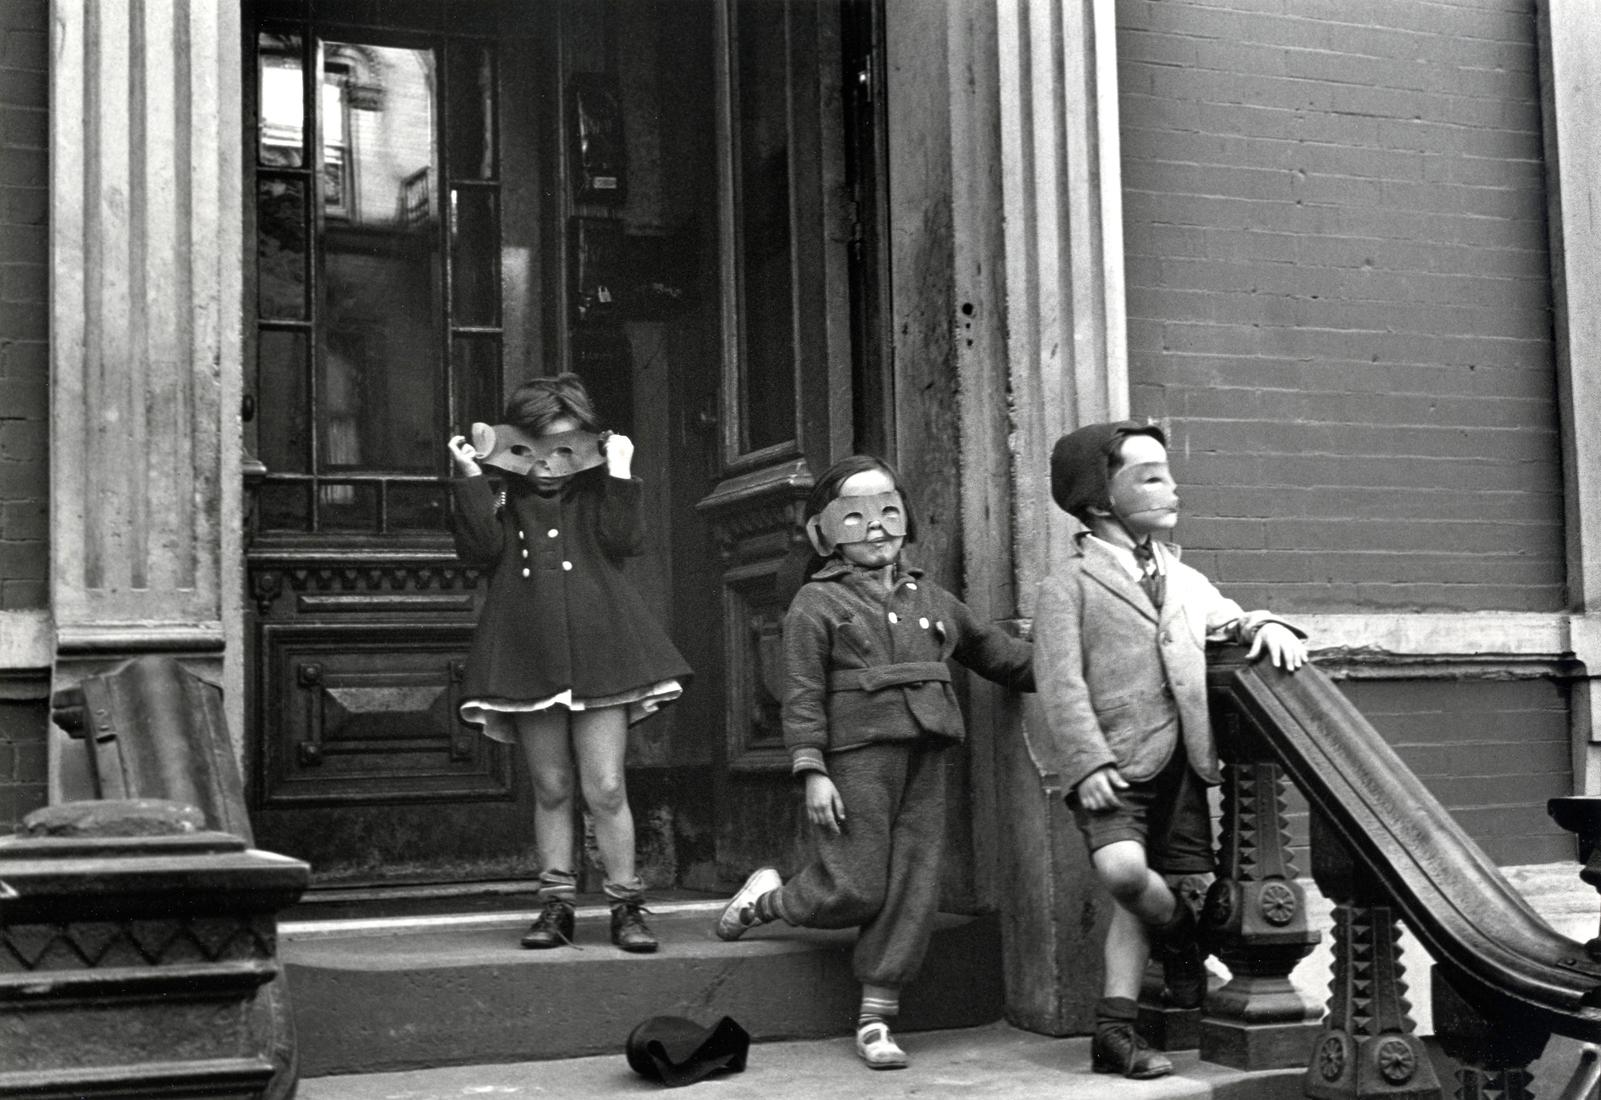 Helen Levitt Portrait Photograph - New York (three kids with masks)